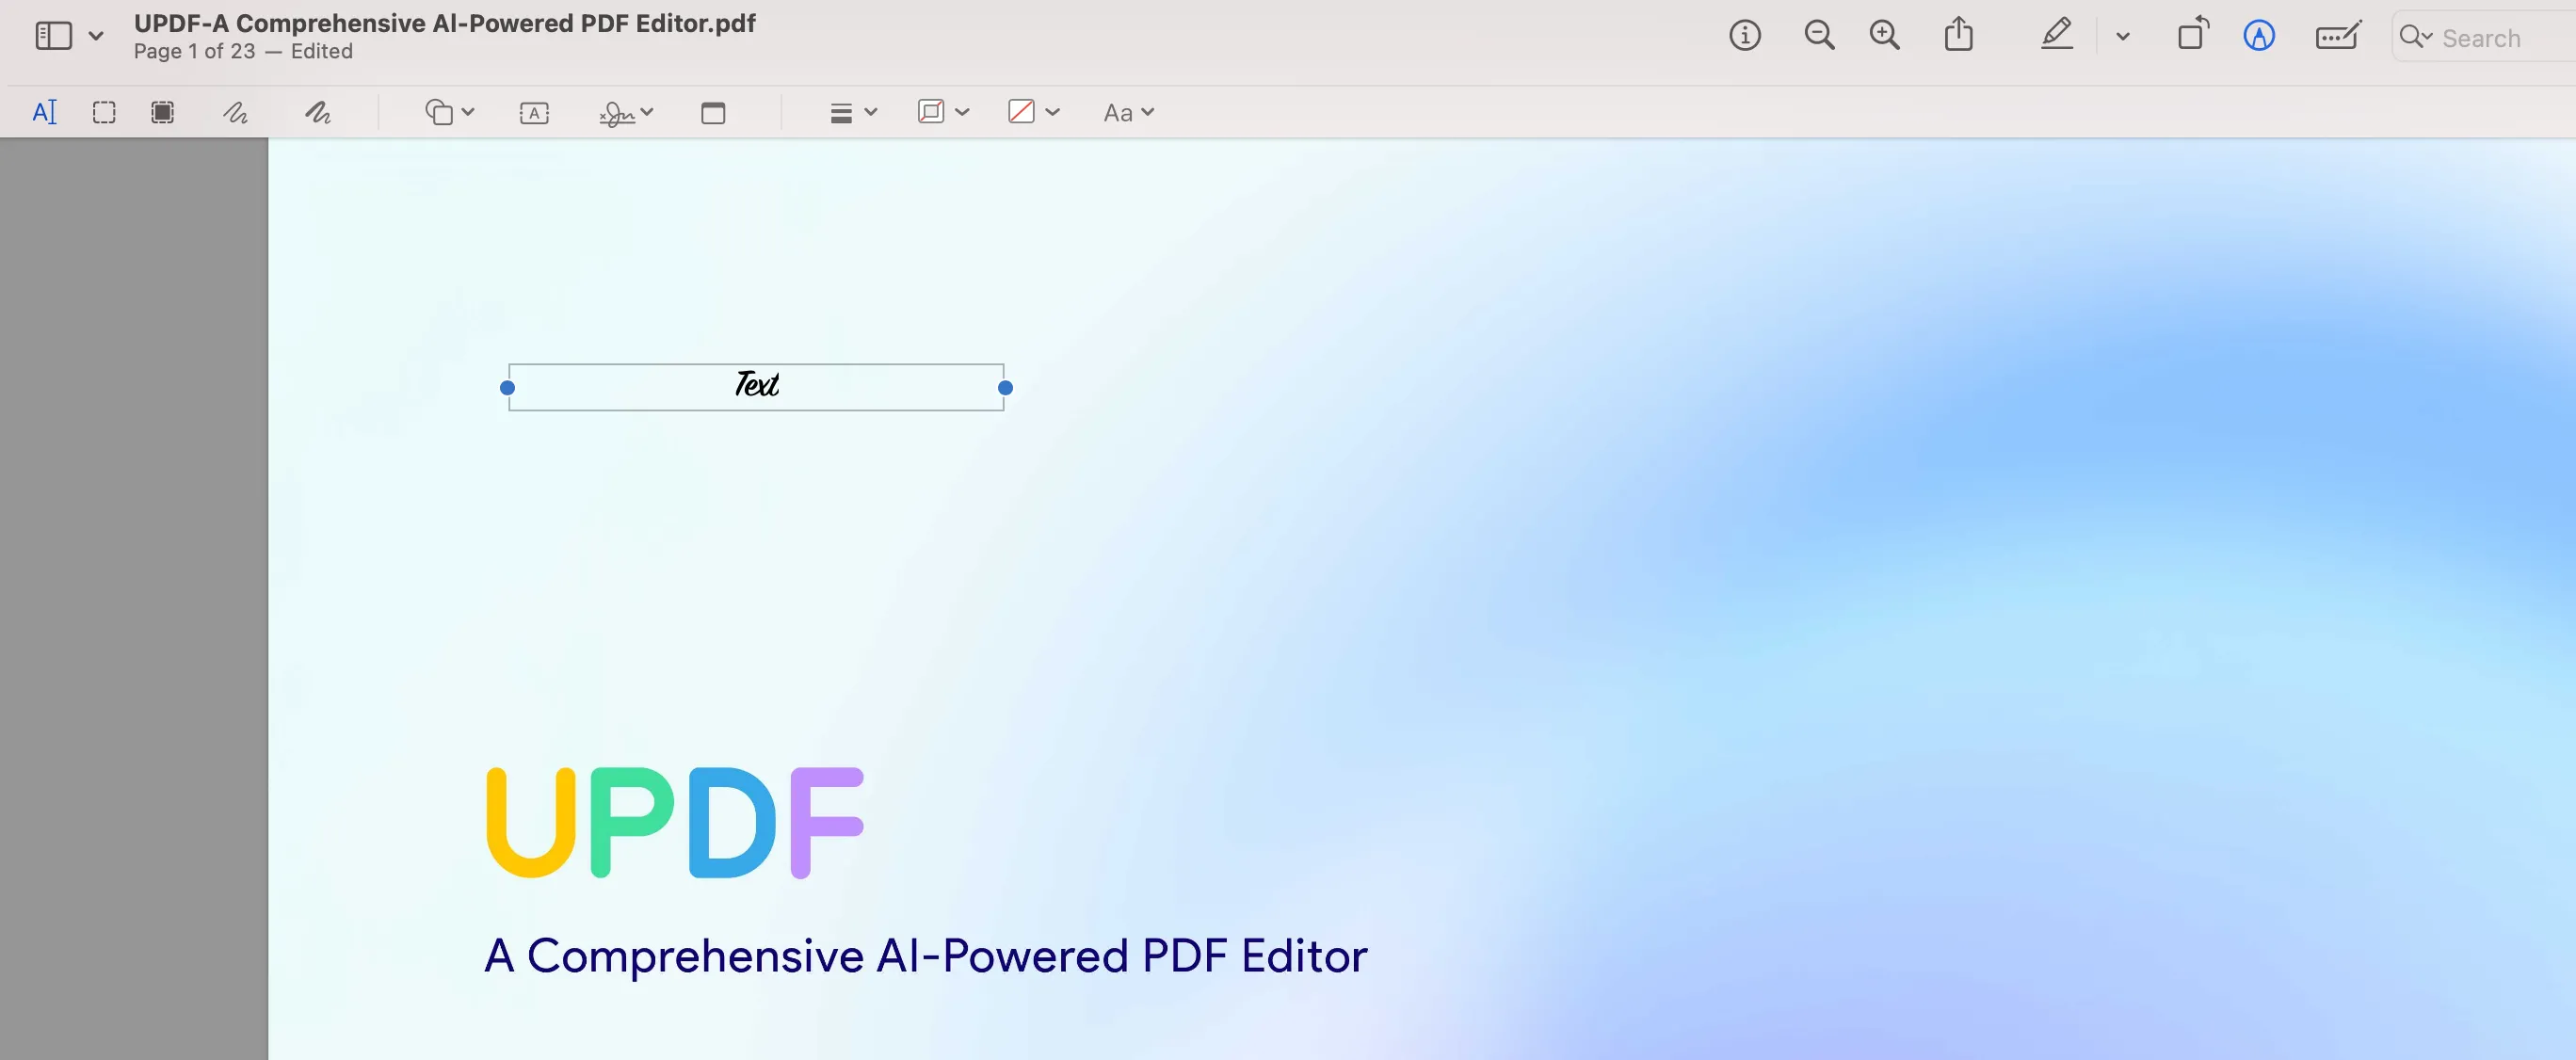 Cómo agregar texto a un PDF en Mac Texto a PDF en Mac con vista previa